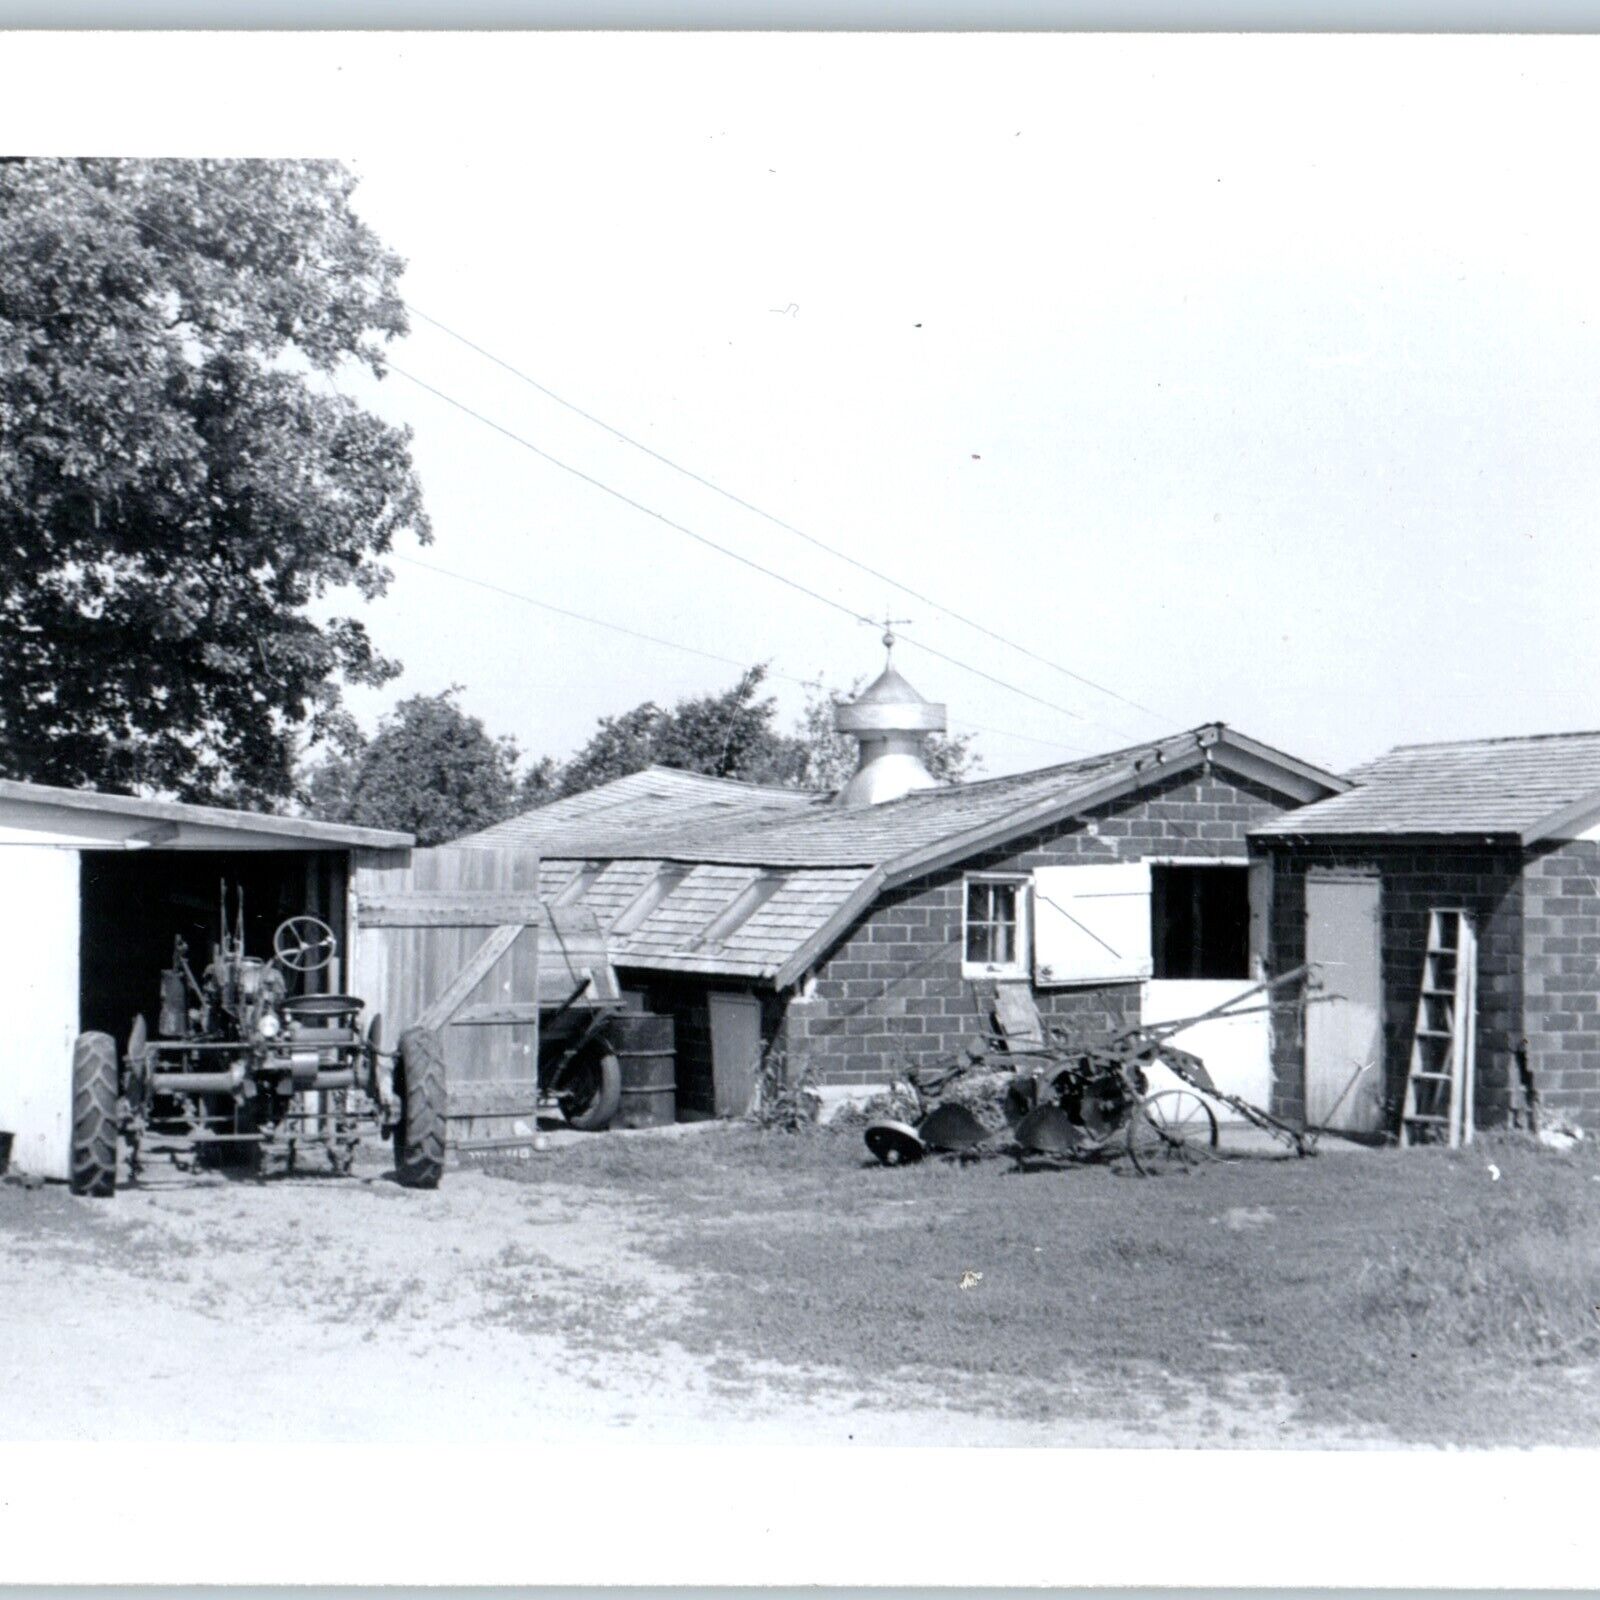 c1940s Farm Buildings Tractor Real Photo Snapshot Brick Chicken Coop House C50